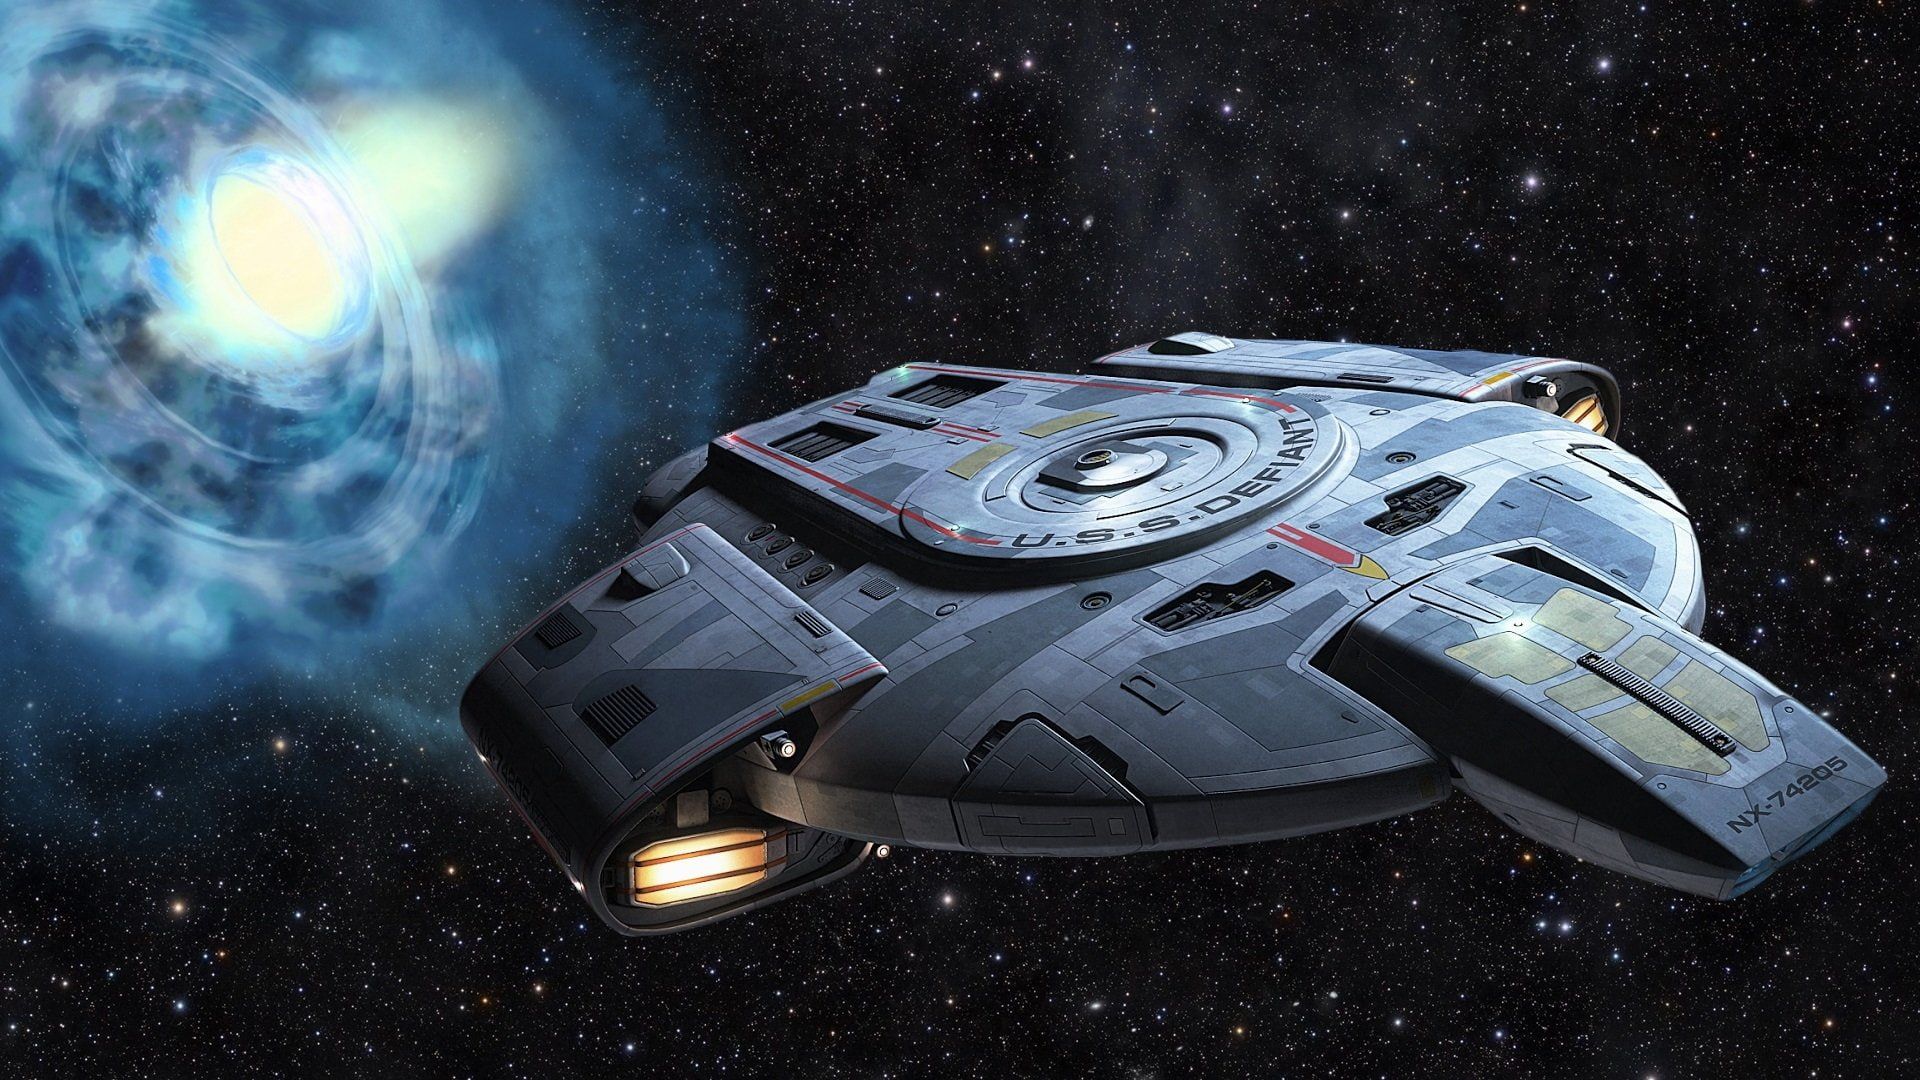 Star Trek Star Trek: Deep Space Nine USS Defiant P #wallpaper #hdwallpaper #desktop. Star trek ds Star trek, Star trek starships